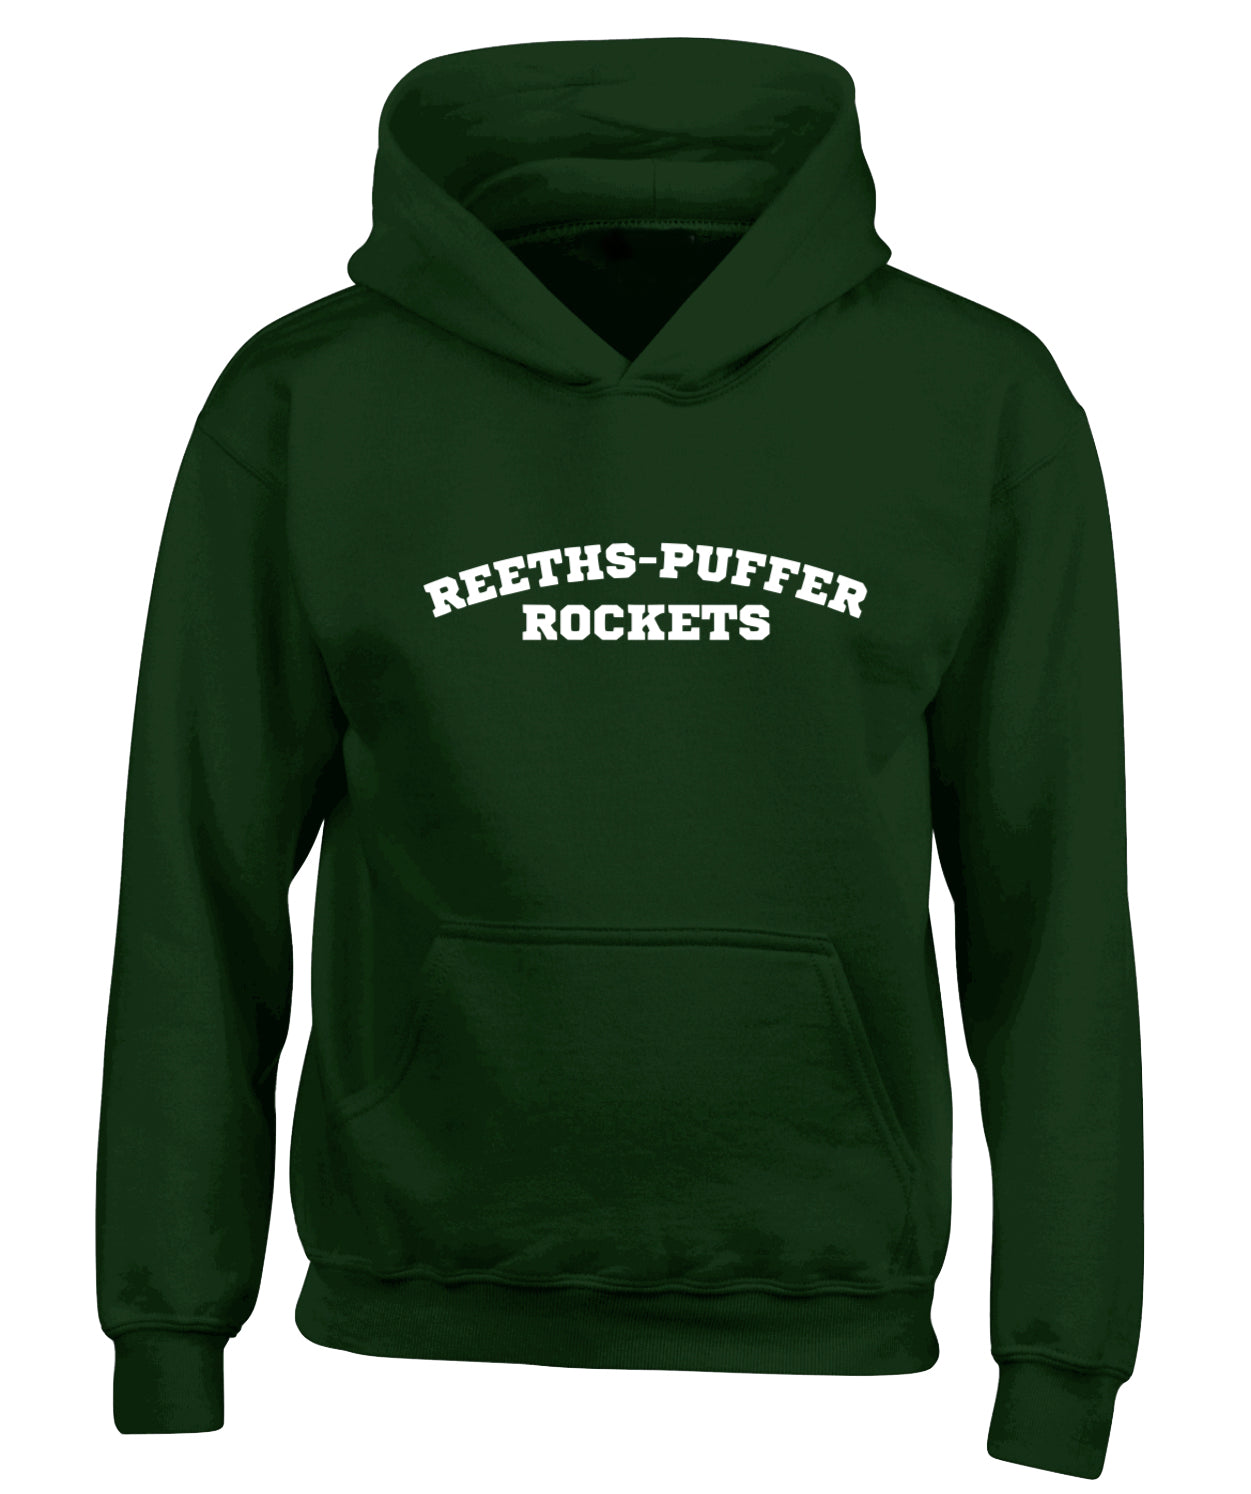 Kids Reeths-Puffer Rockets Green Hoodie - optional hearts